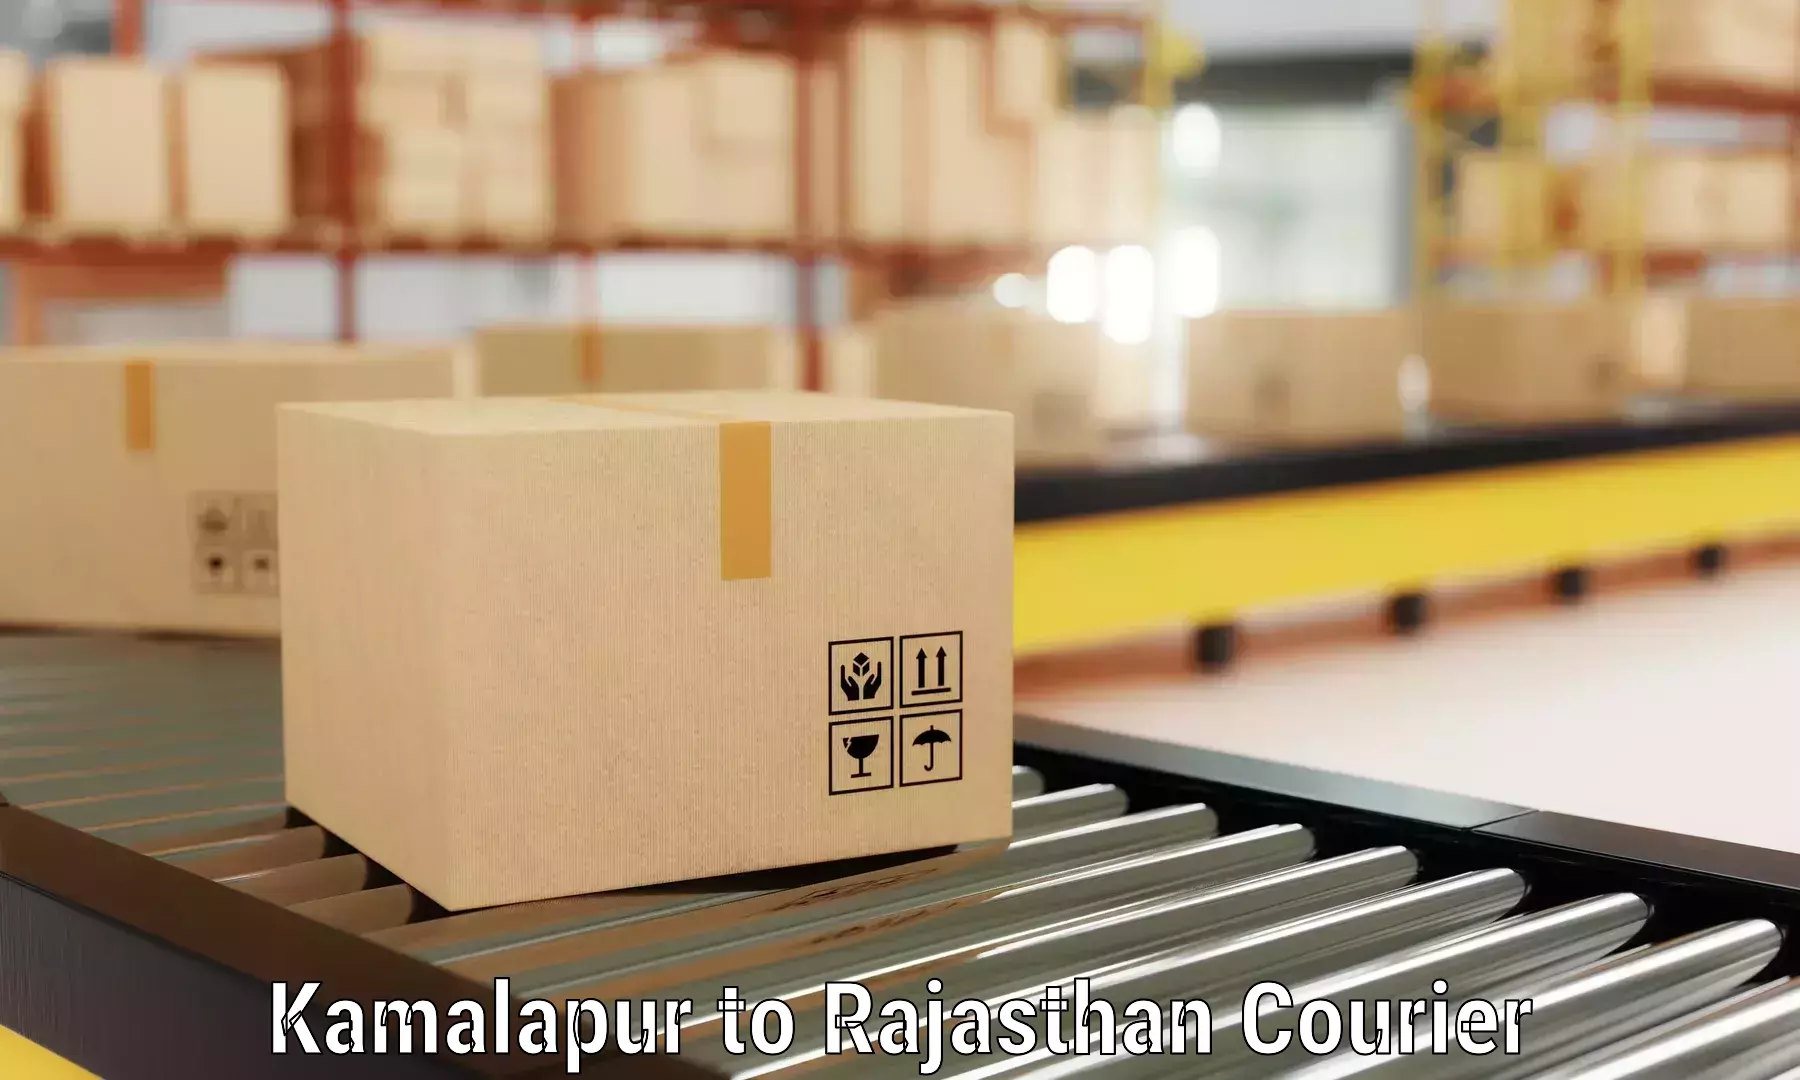 Quality moving company in Kamalapur to Kalwar